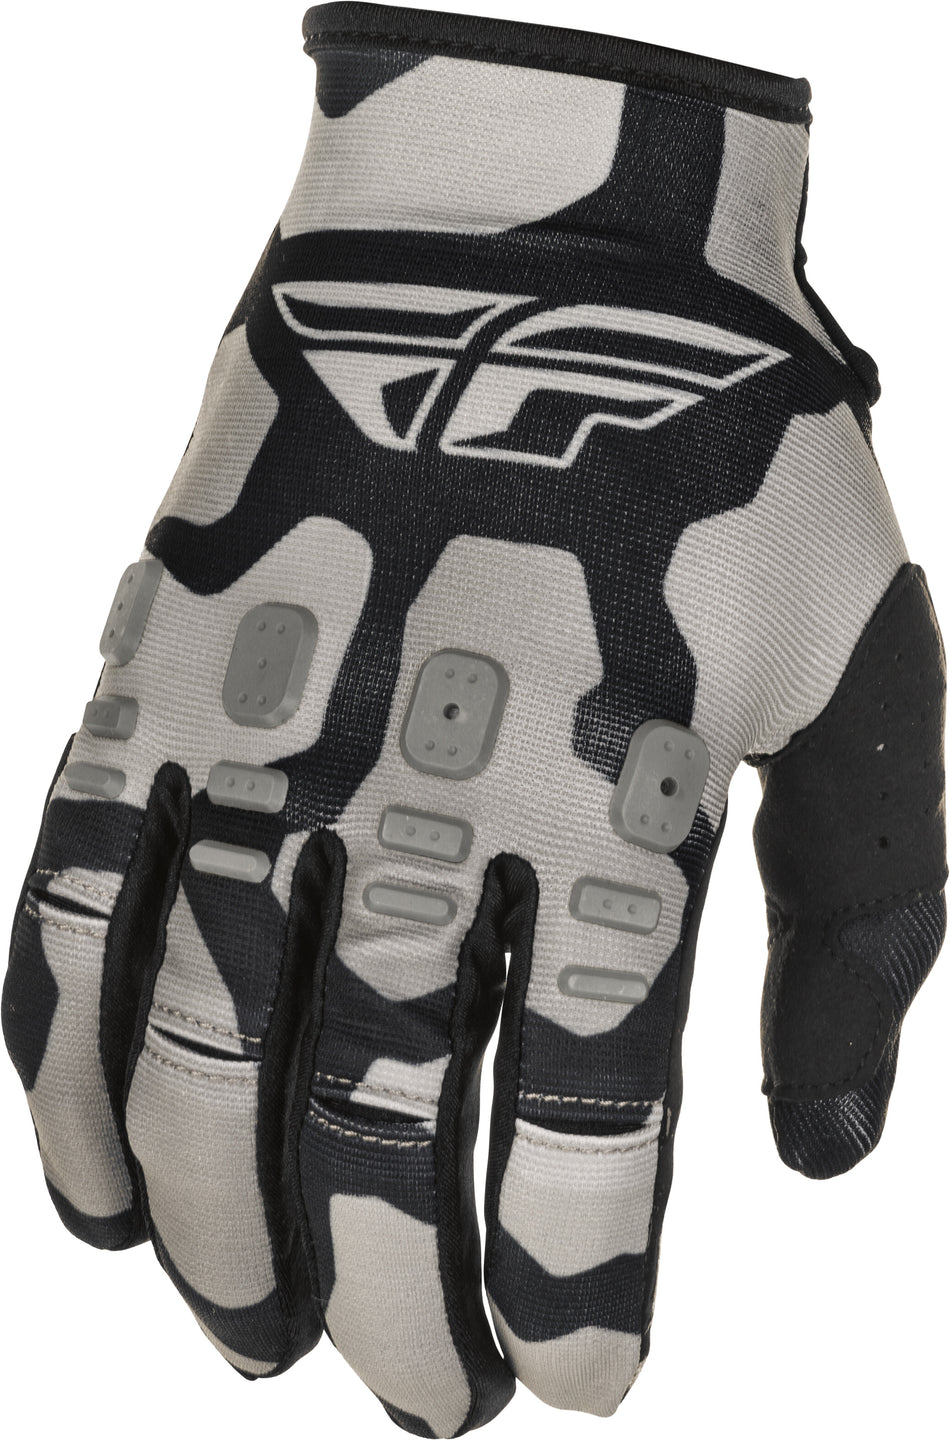 FLY RACING Kinetic K221 Gloves Black/Grey Sz 07 374-51007